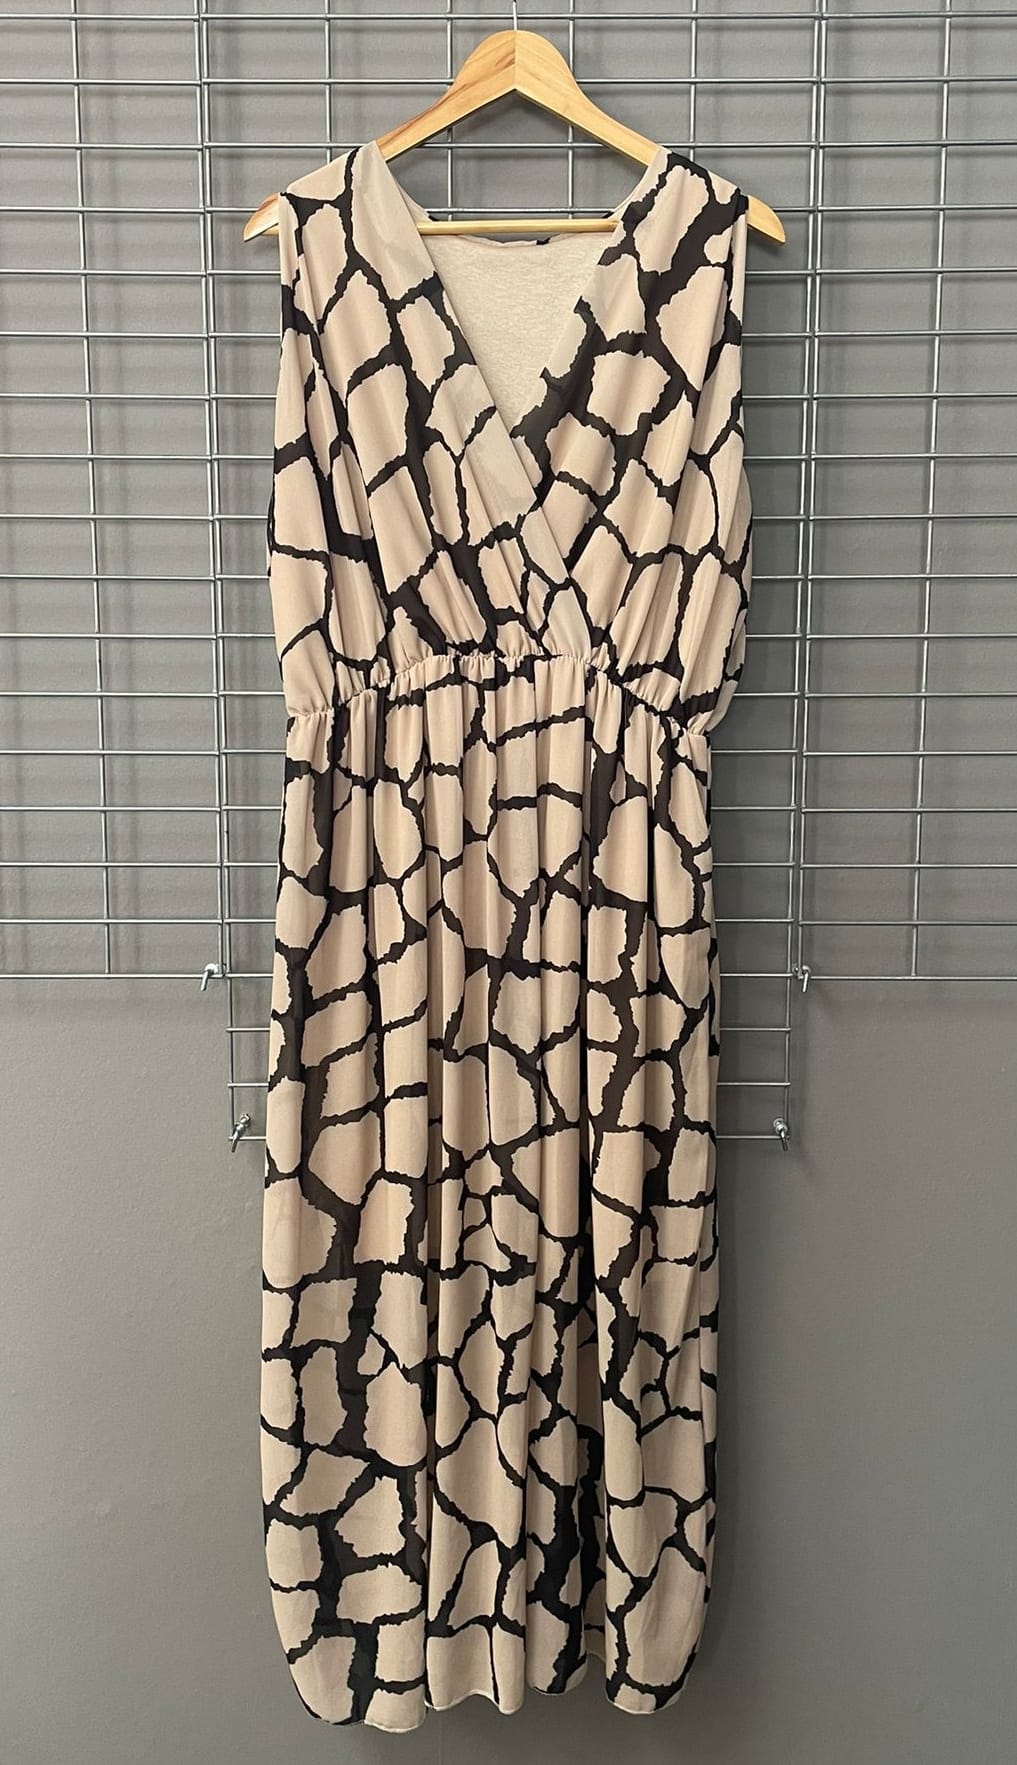 Gr. 50 - 54 Kleid mit gekreuztem Ausschnitt